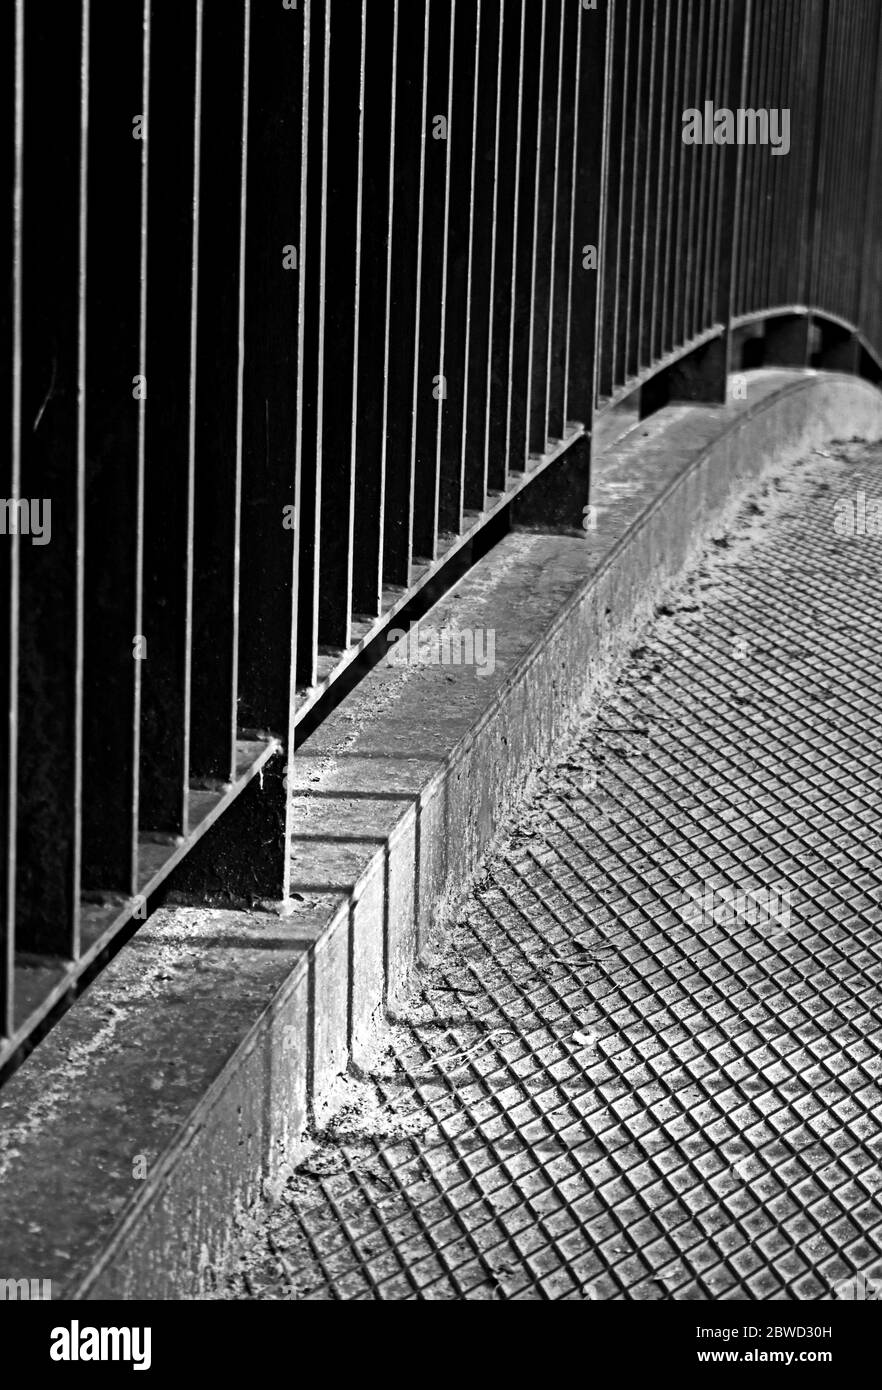 Bridge detail in black and white Stock Photo